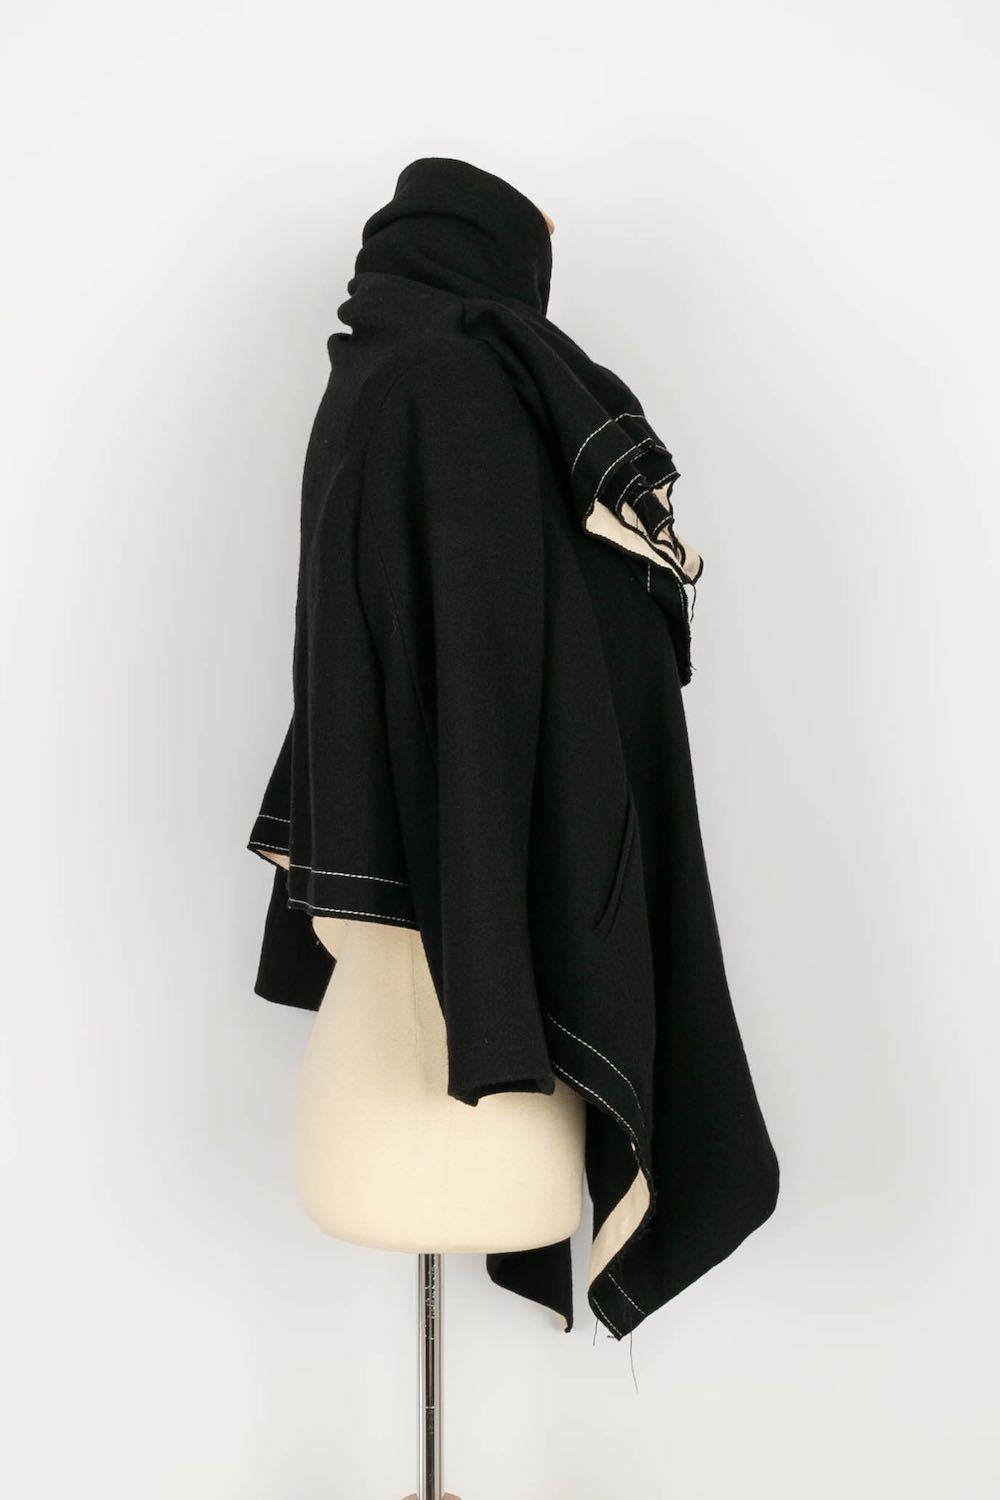 Women's Peachoo + Krejberg Jacket in Black Wool and Beige Canvas, 2008-2009 For Sale